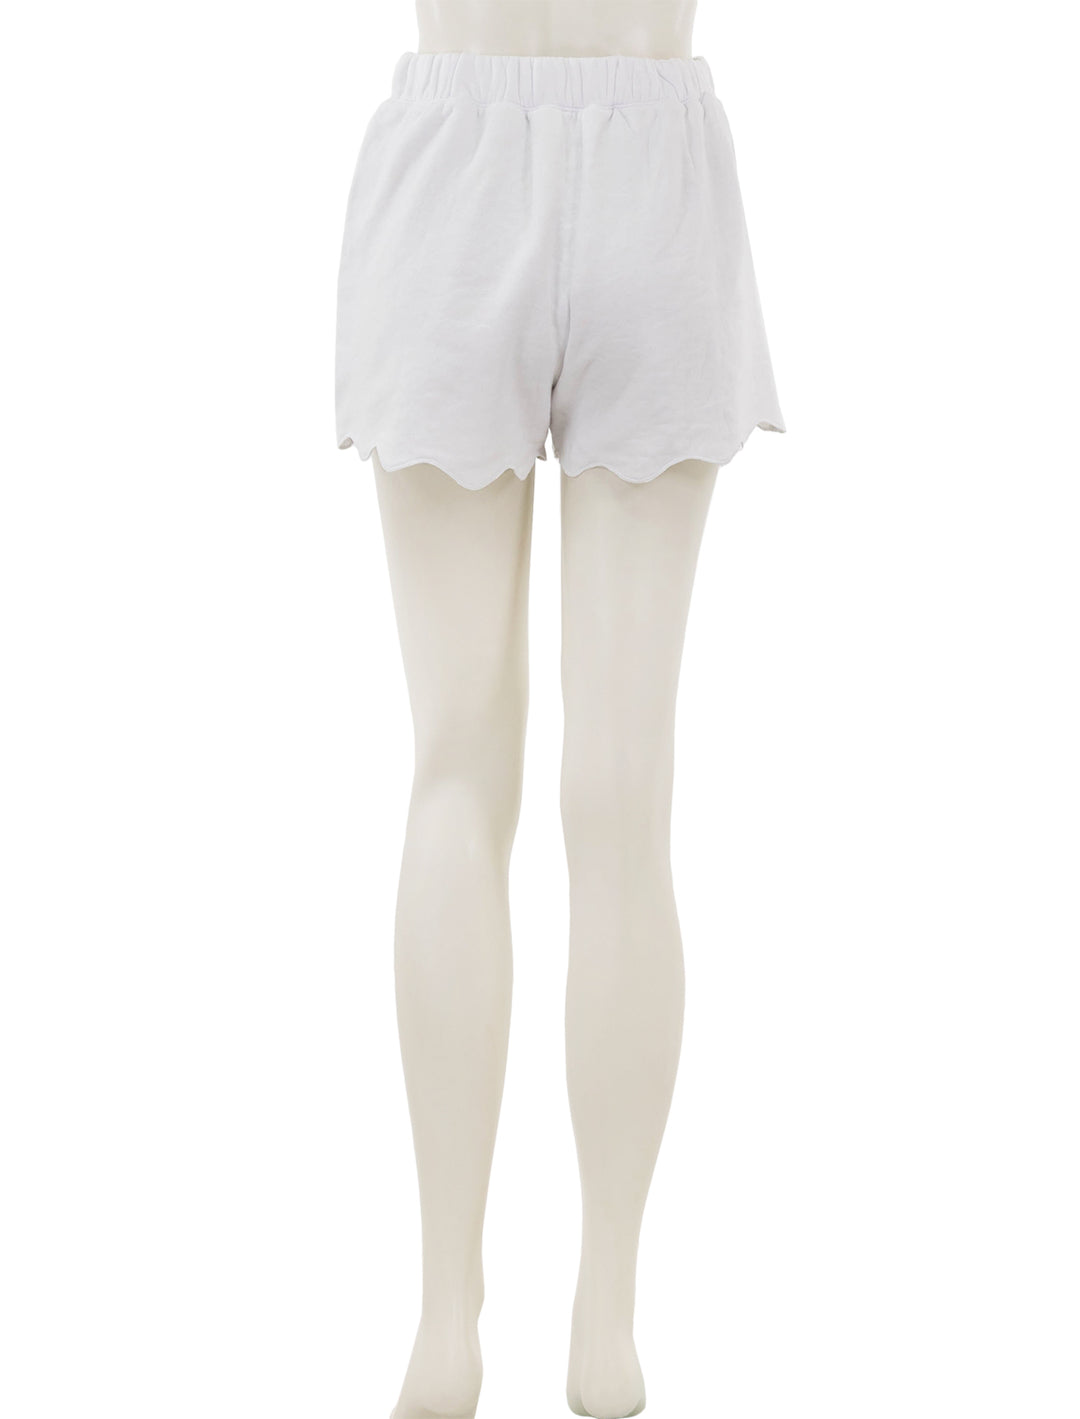 Back view of Splendid's nori scallop trim shorts in white.